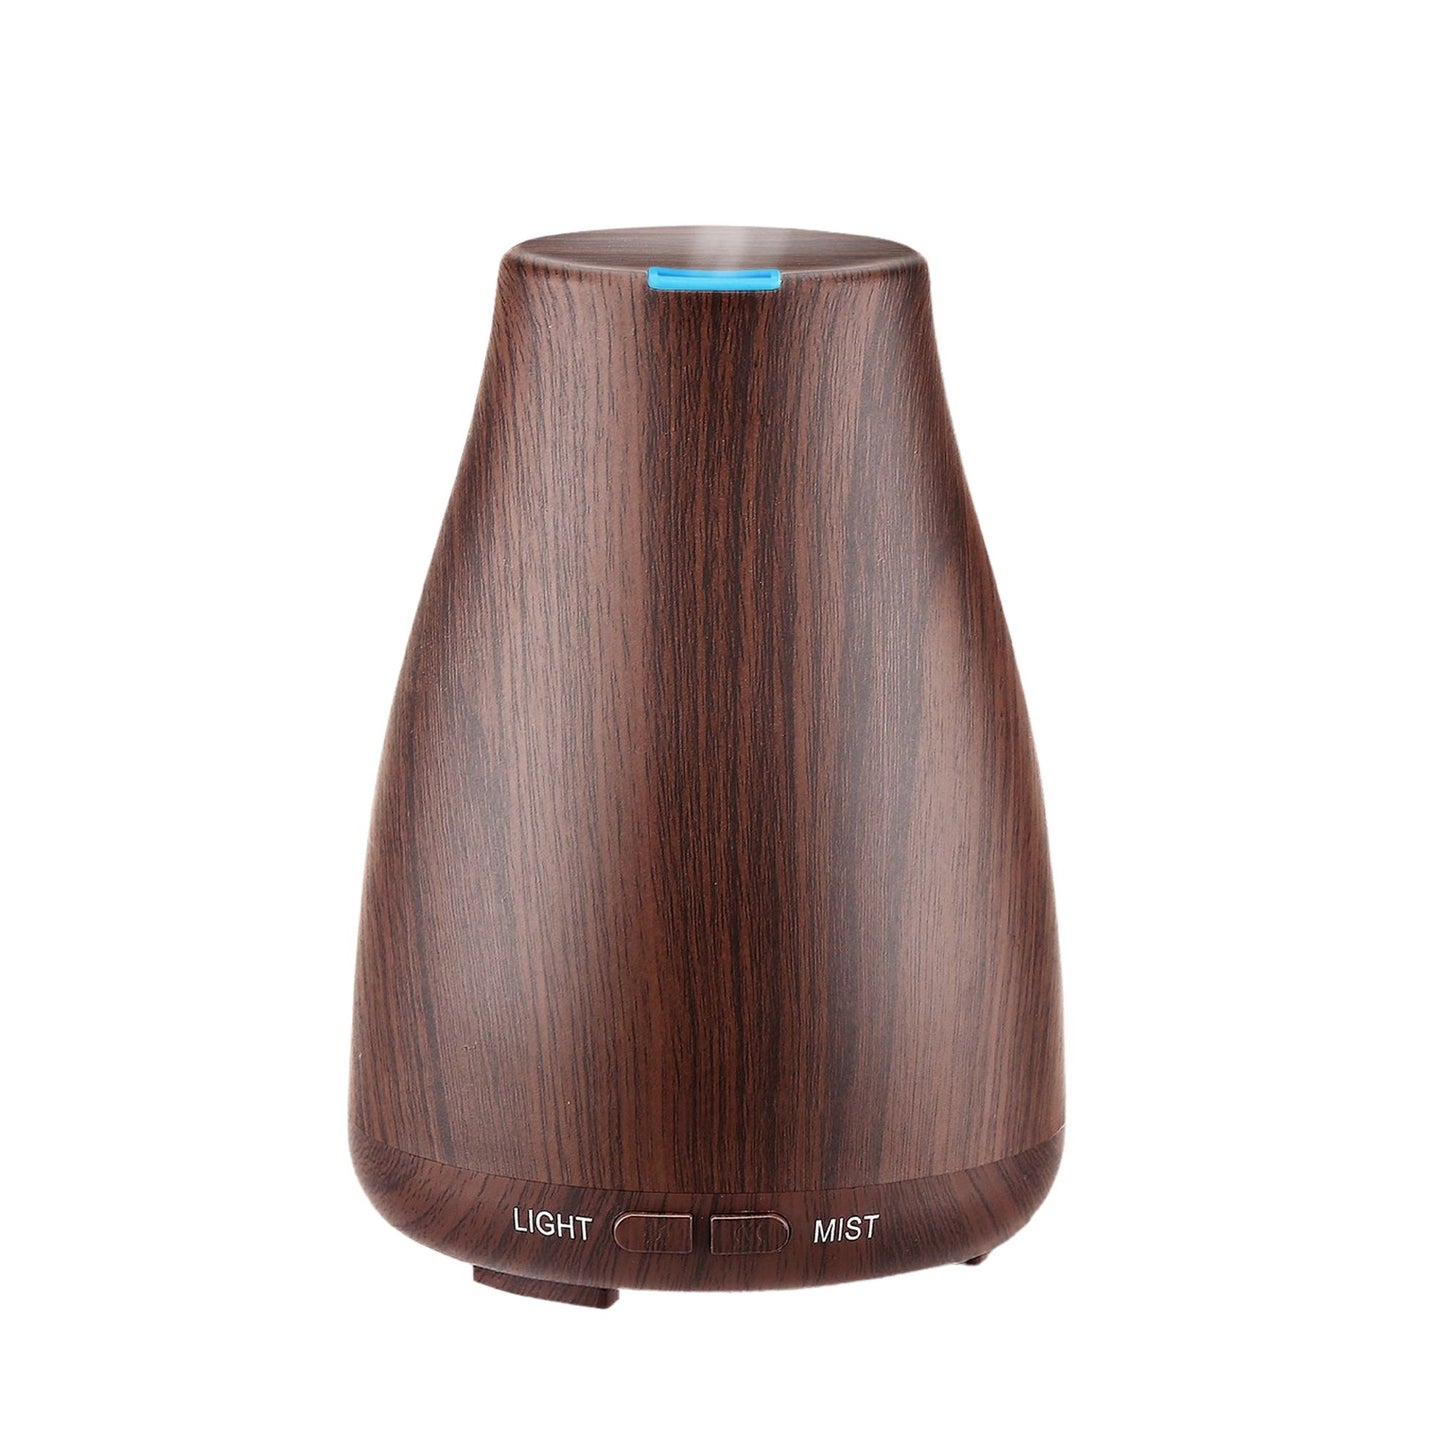 Aesthetics Ultrasonic Wood-Finish Aroma Diffuser with Optional Oils